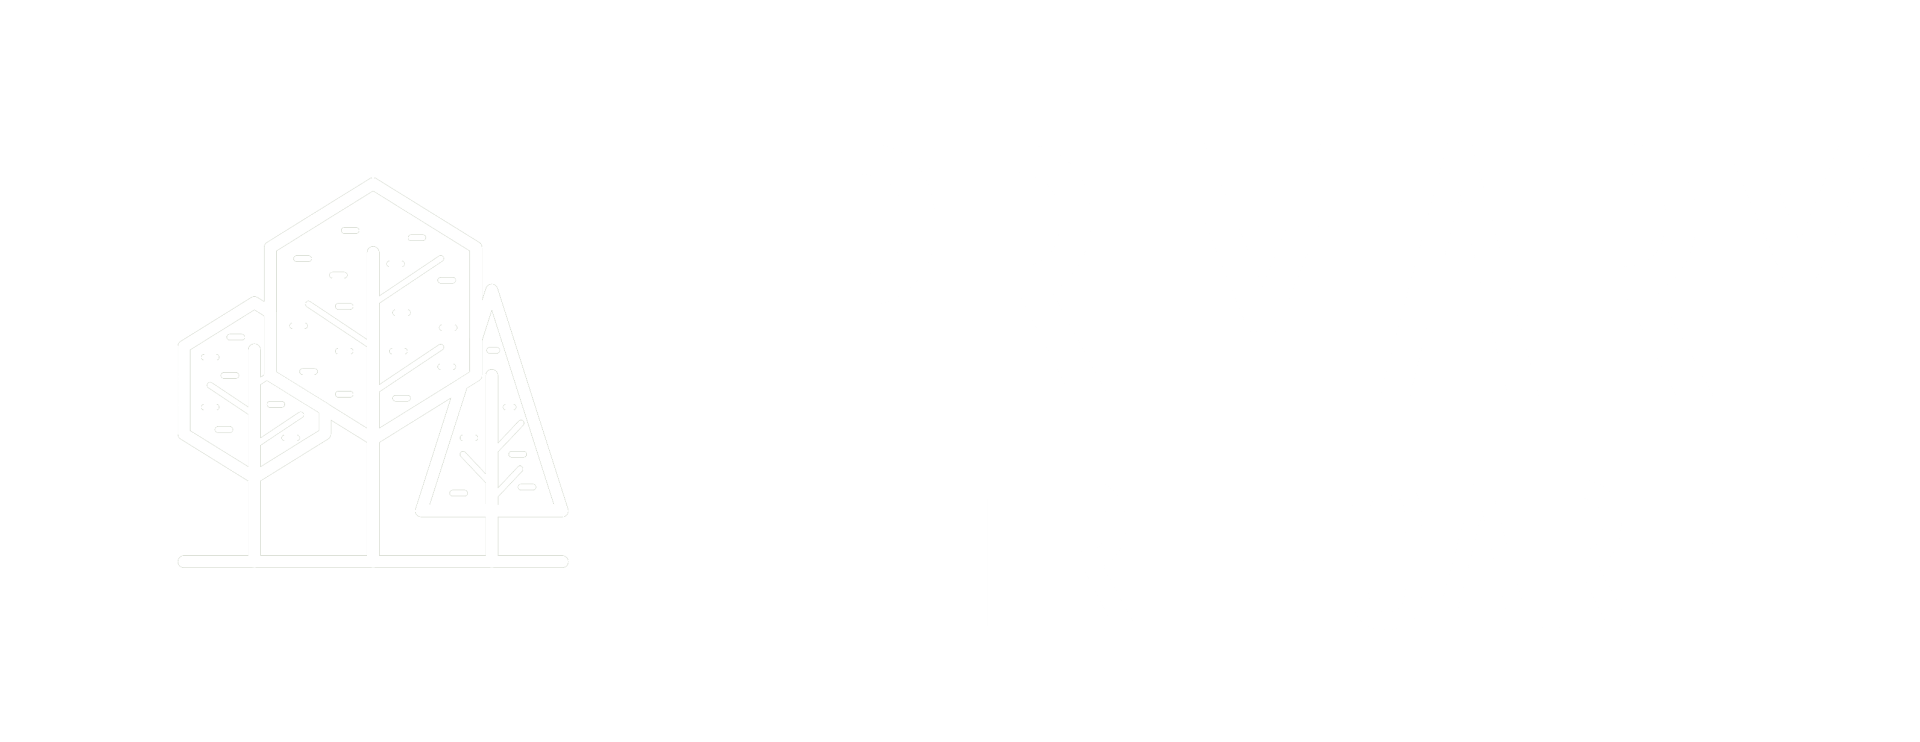 Primary Tree Care logo, white